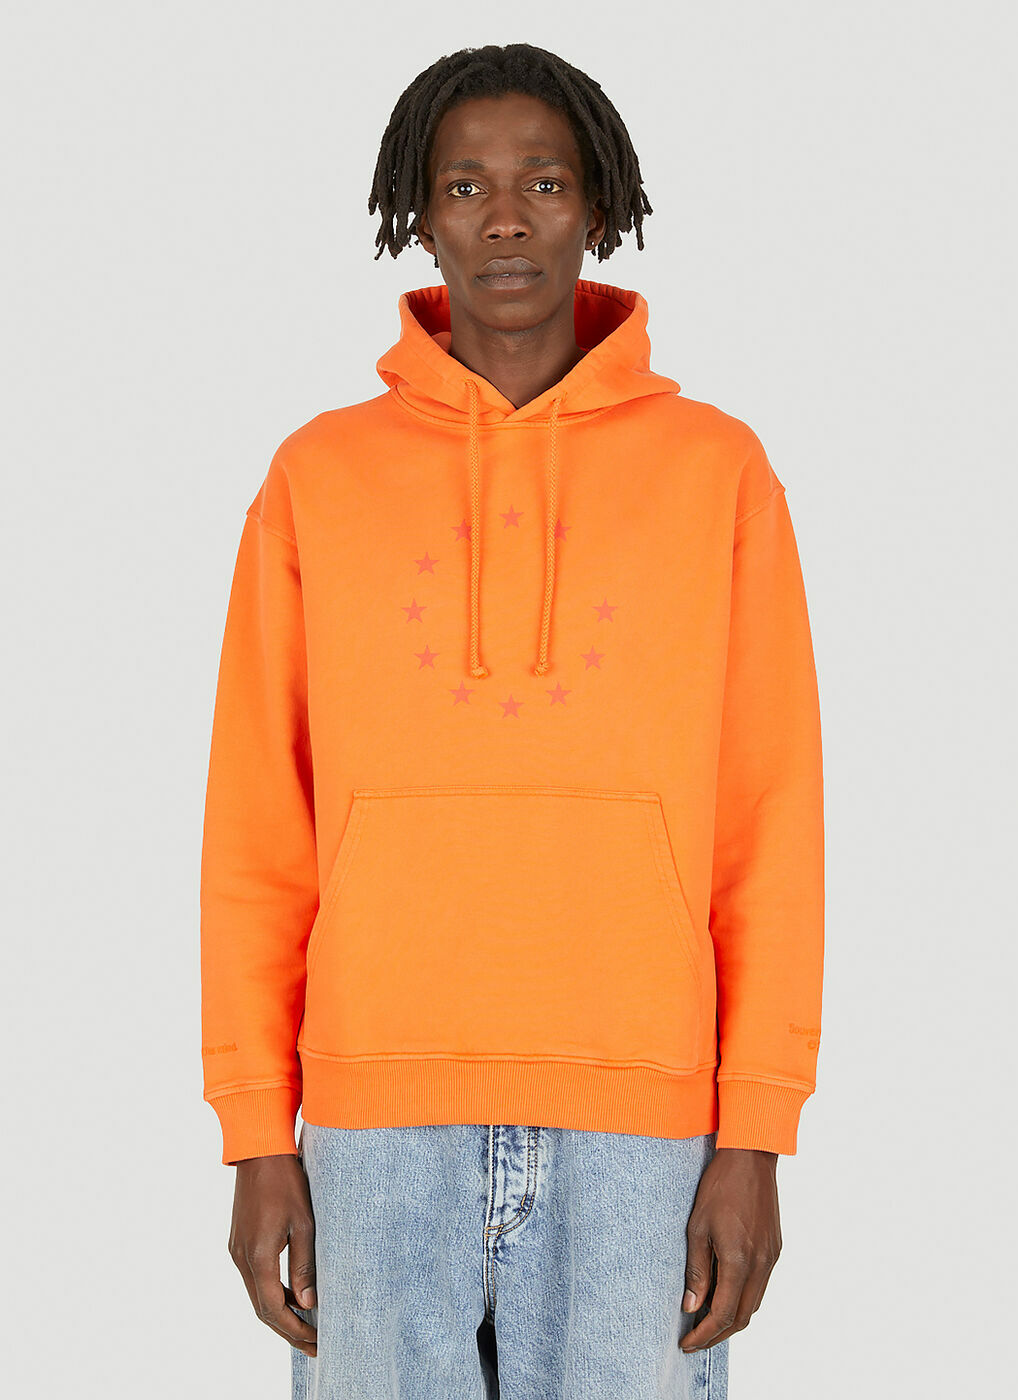 Eunify Hooded Sweatshirt in Orange Souvenir Official